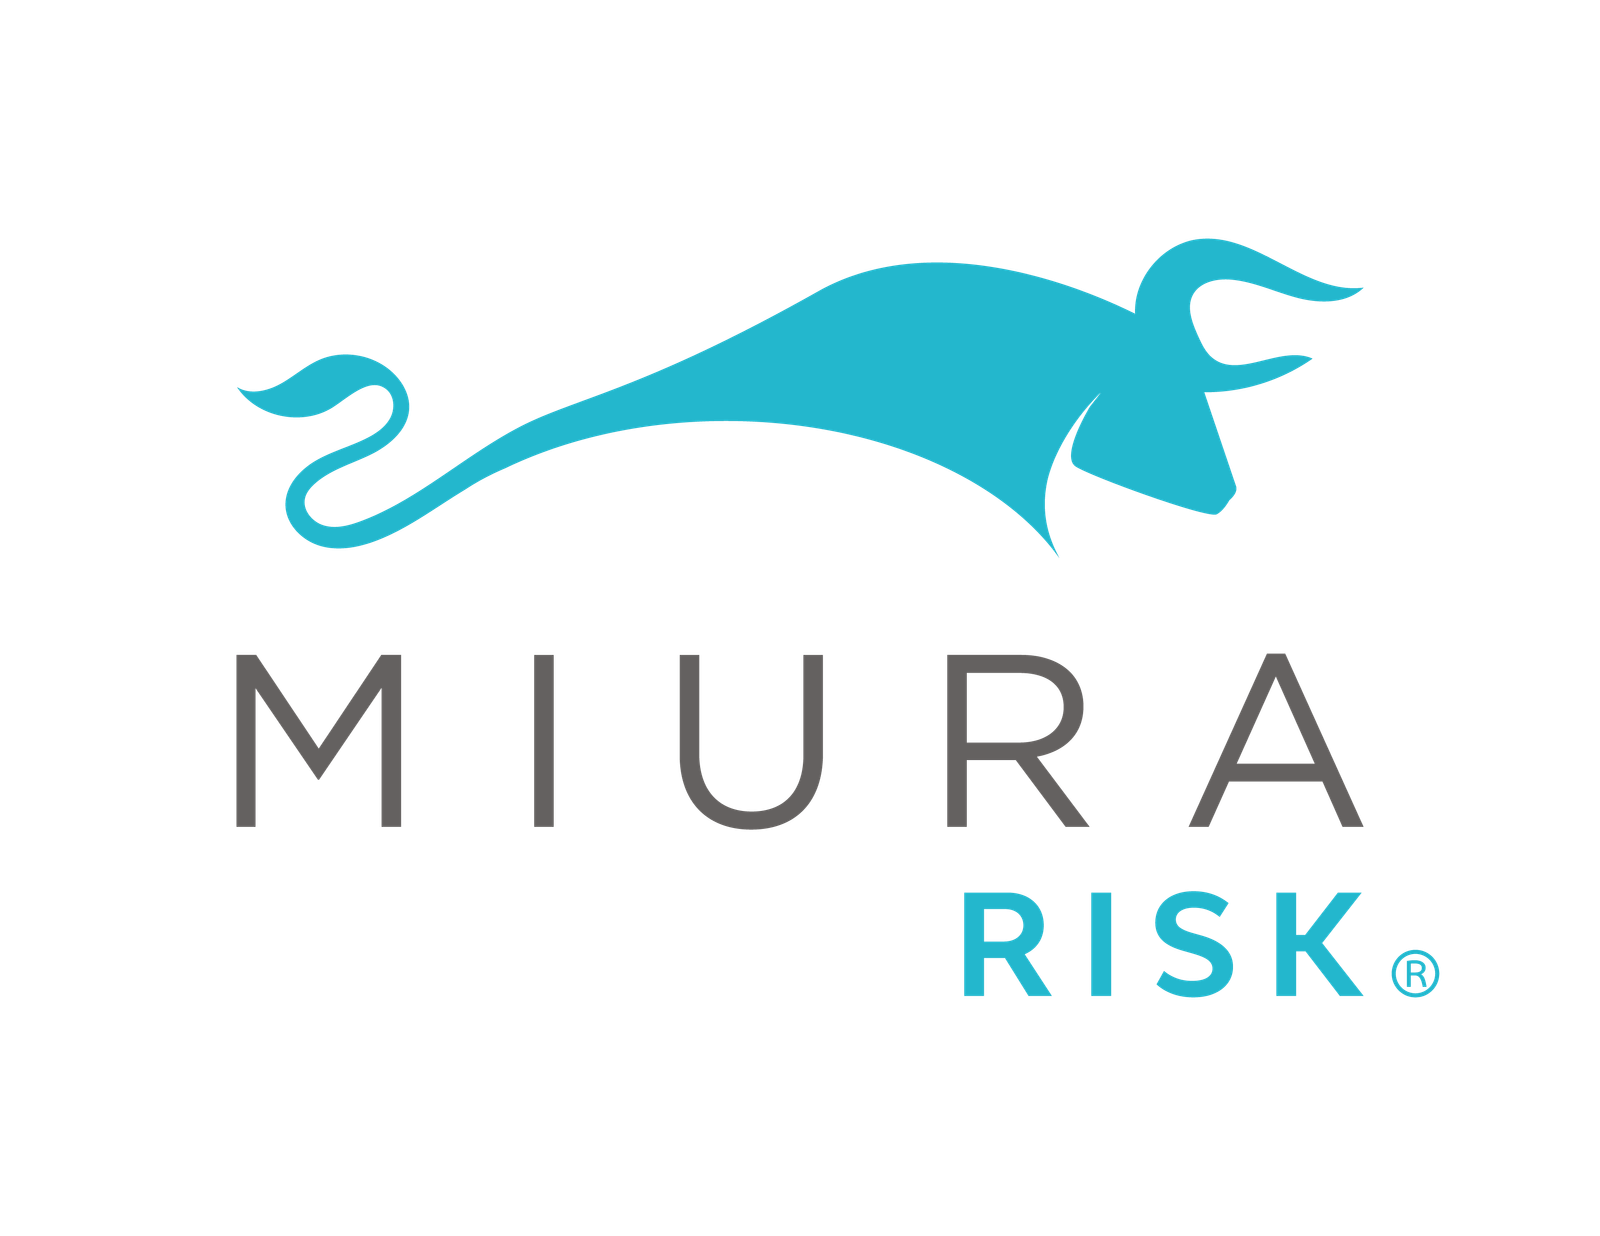 MIURA Risk